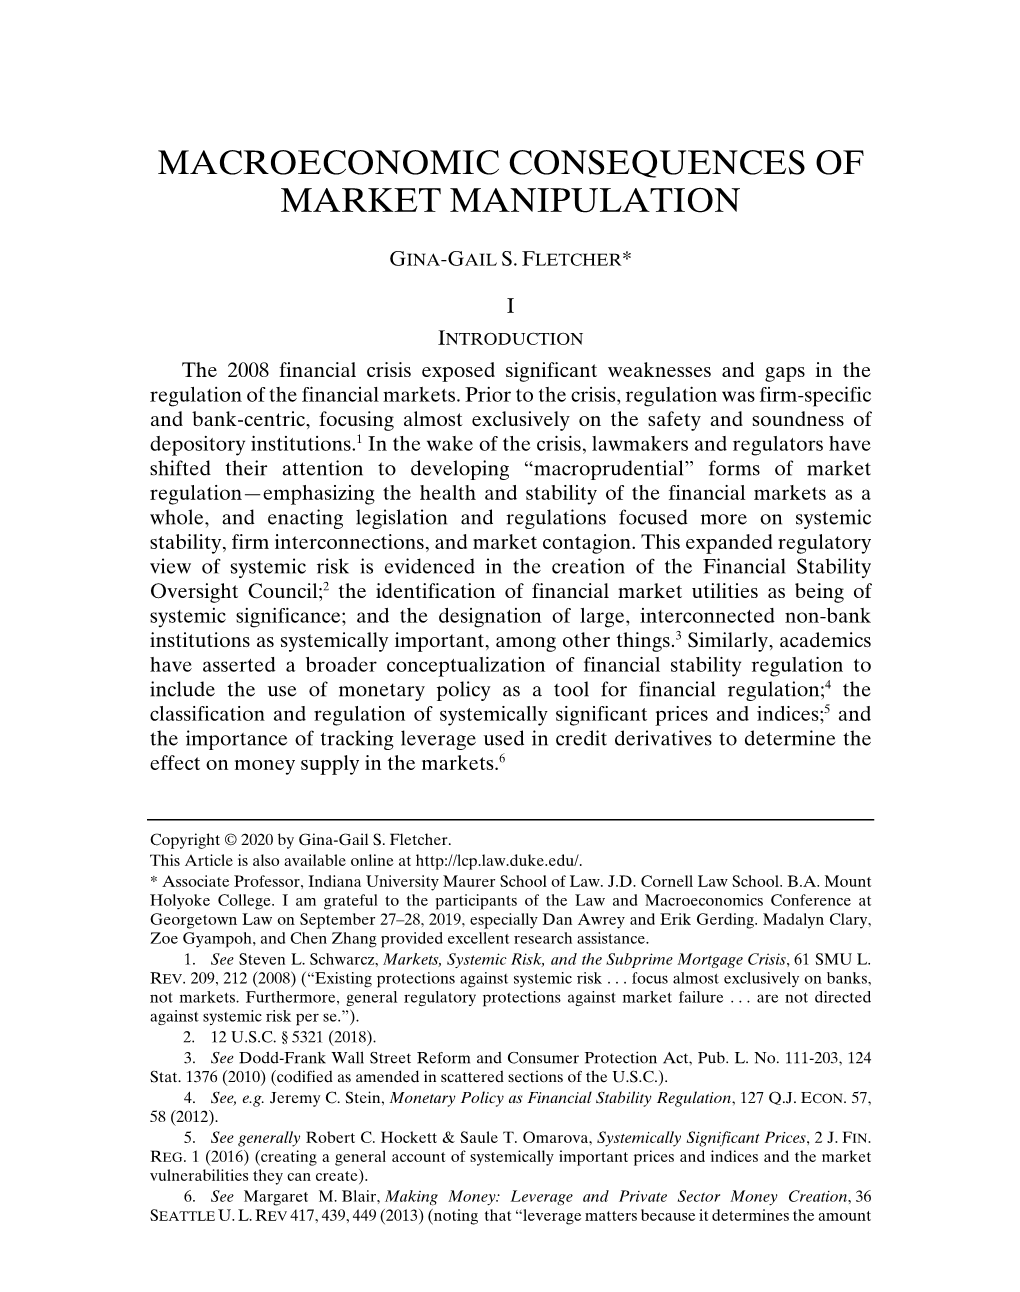 Macroeconomic Consequences of Market Manipulation